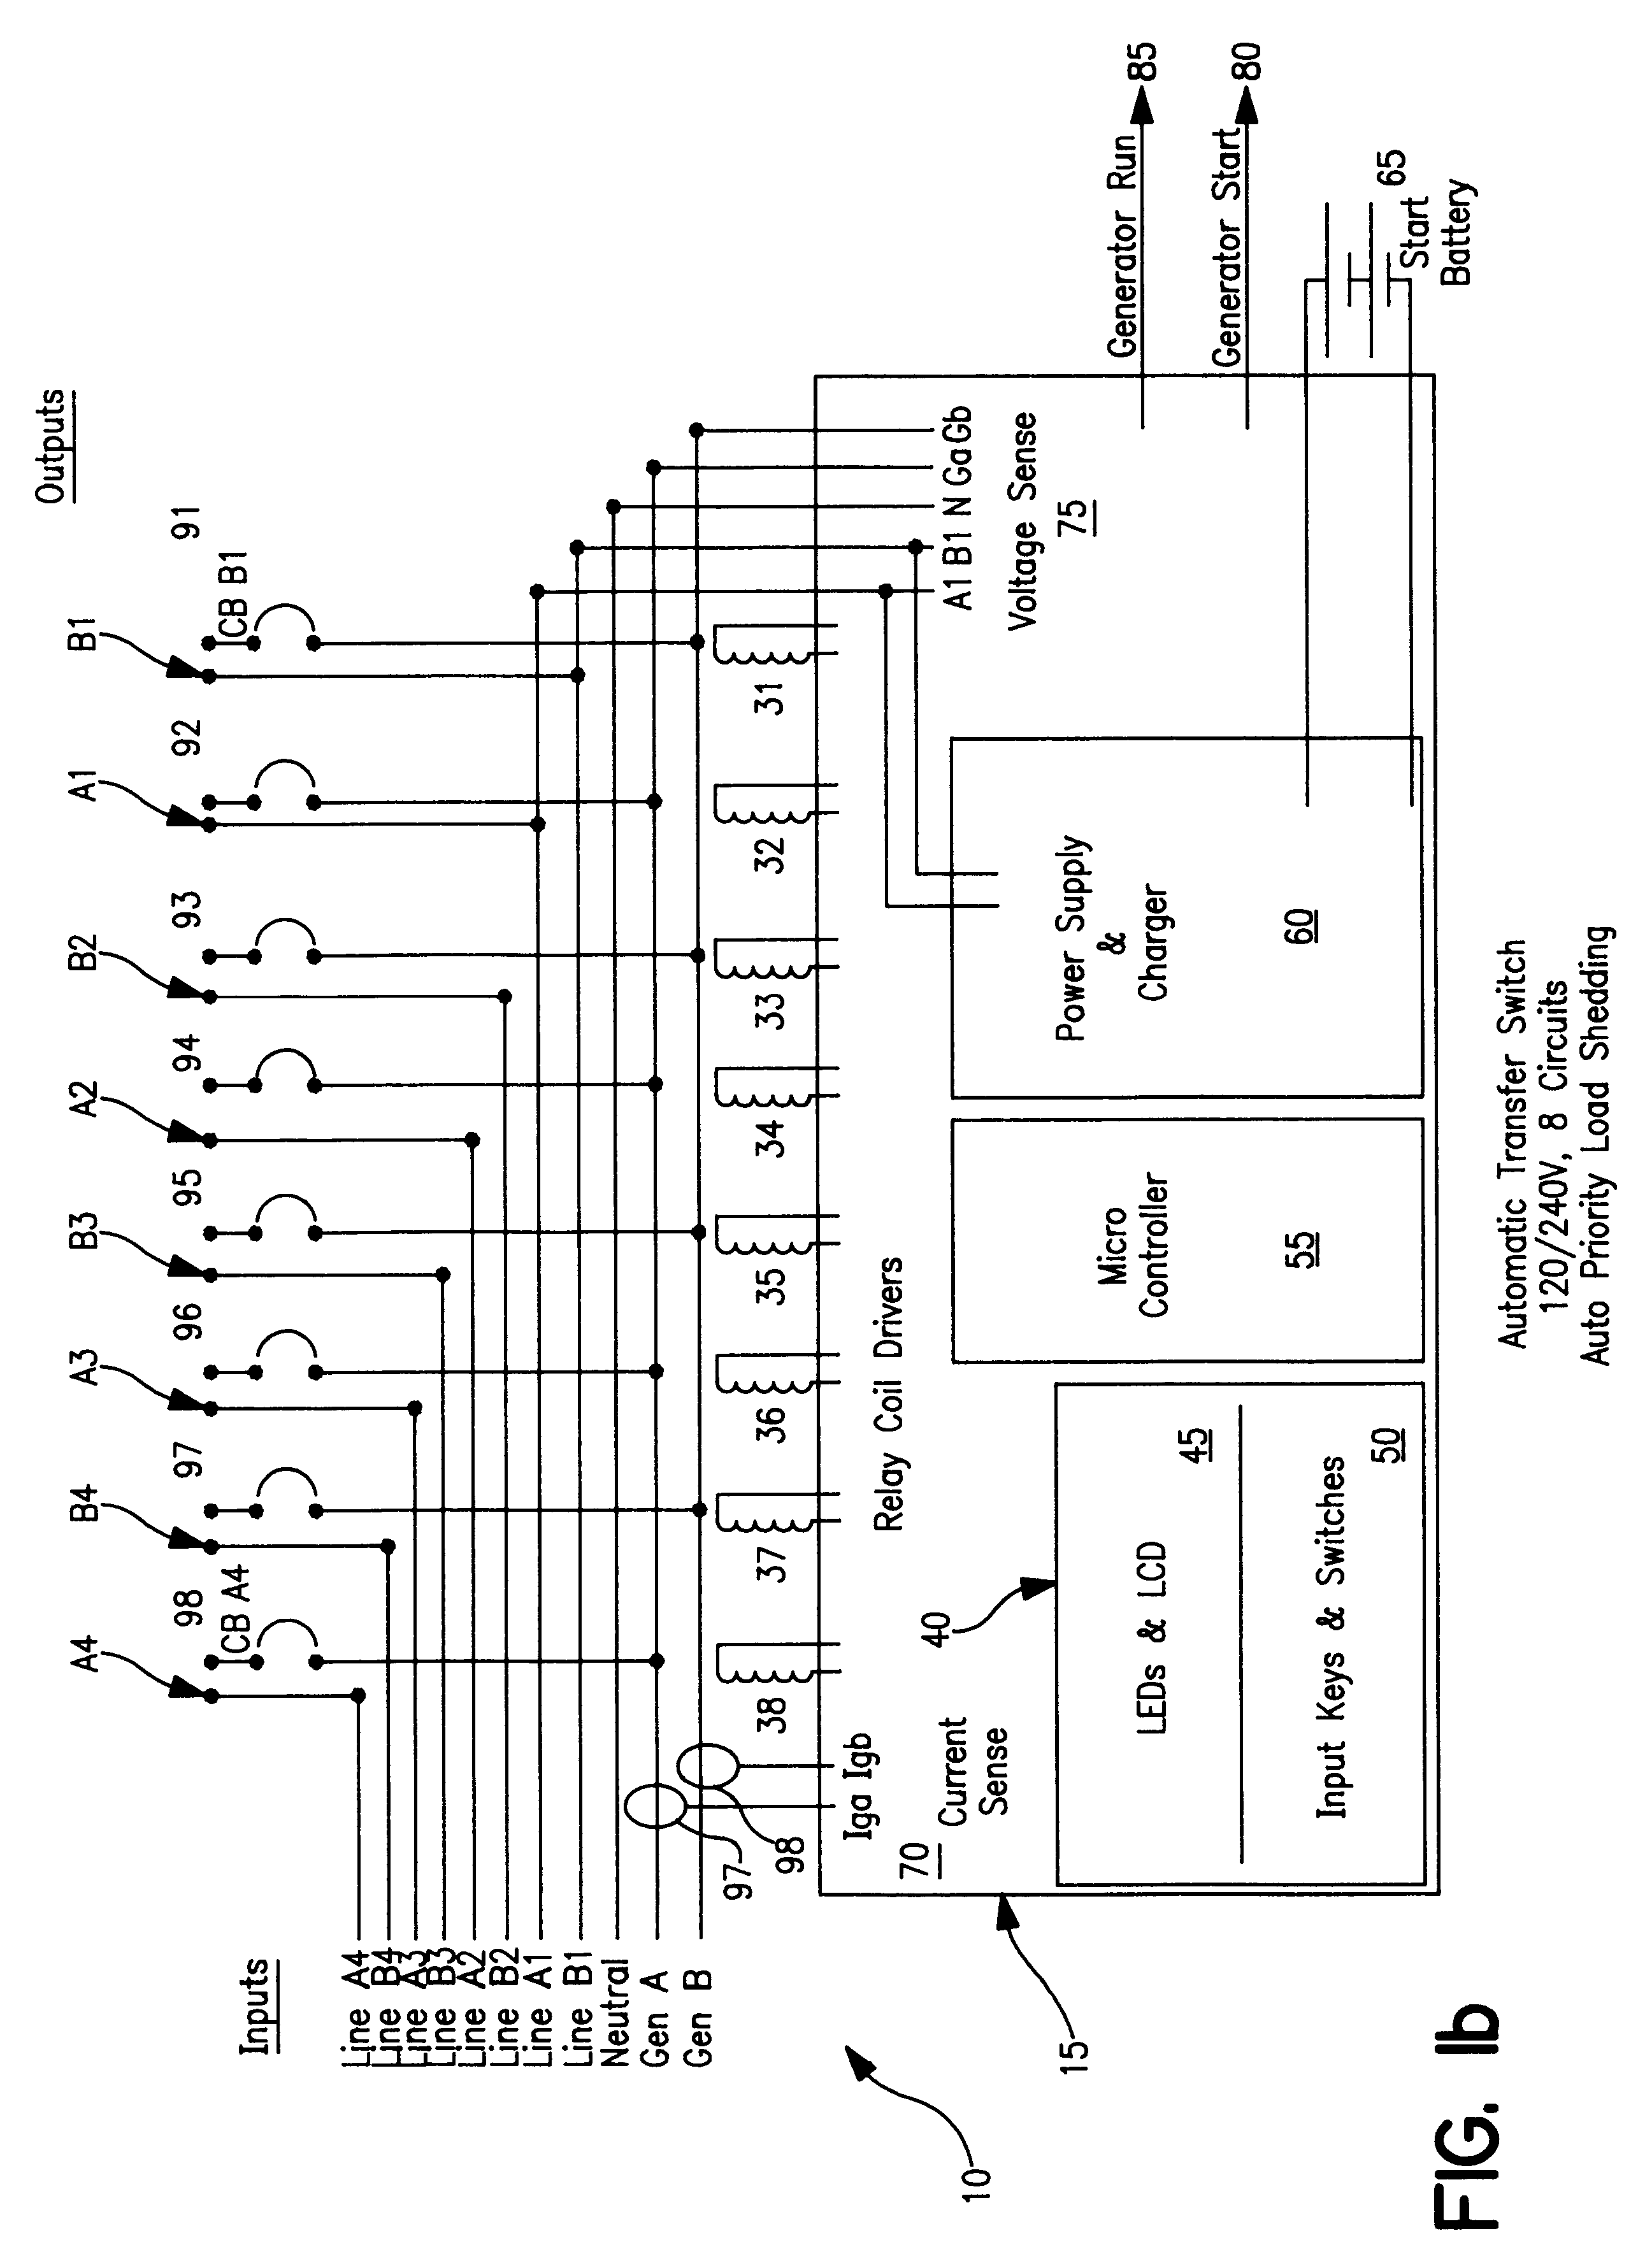 Diagram Asco 8327 Wiring Diagram Full Version Hd Quality Wiring Diagram Wiringharnessdiagrams Plusmagazine It